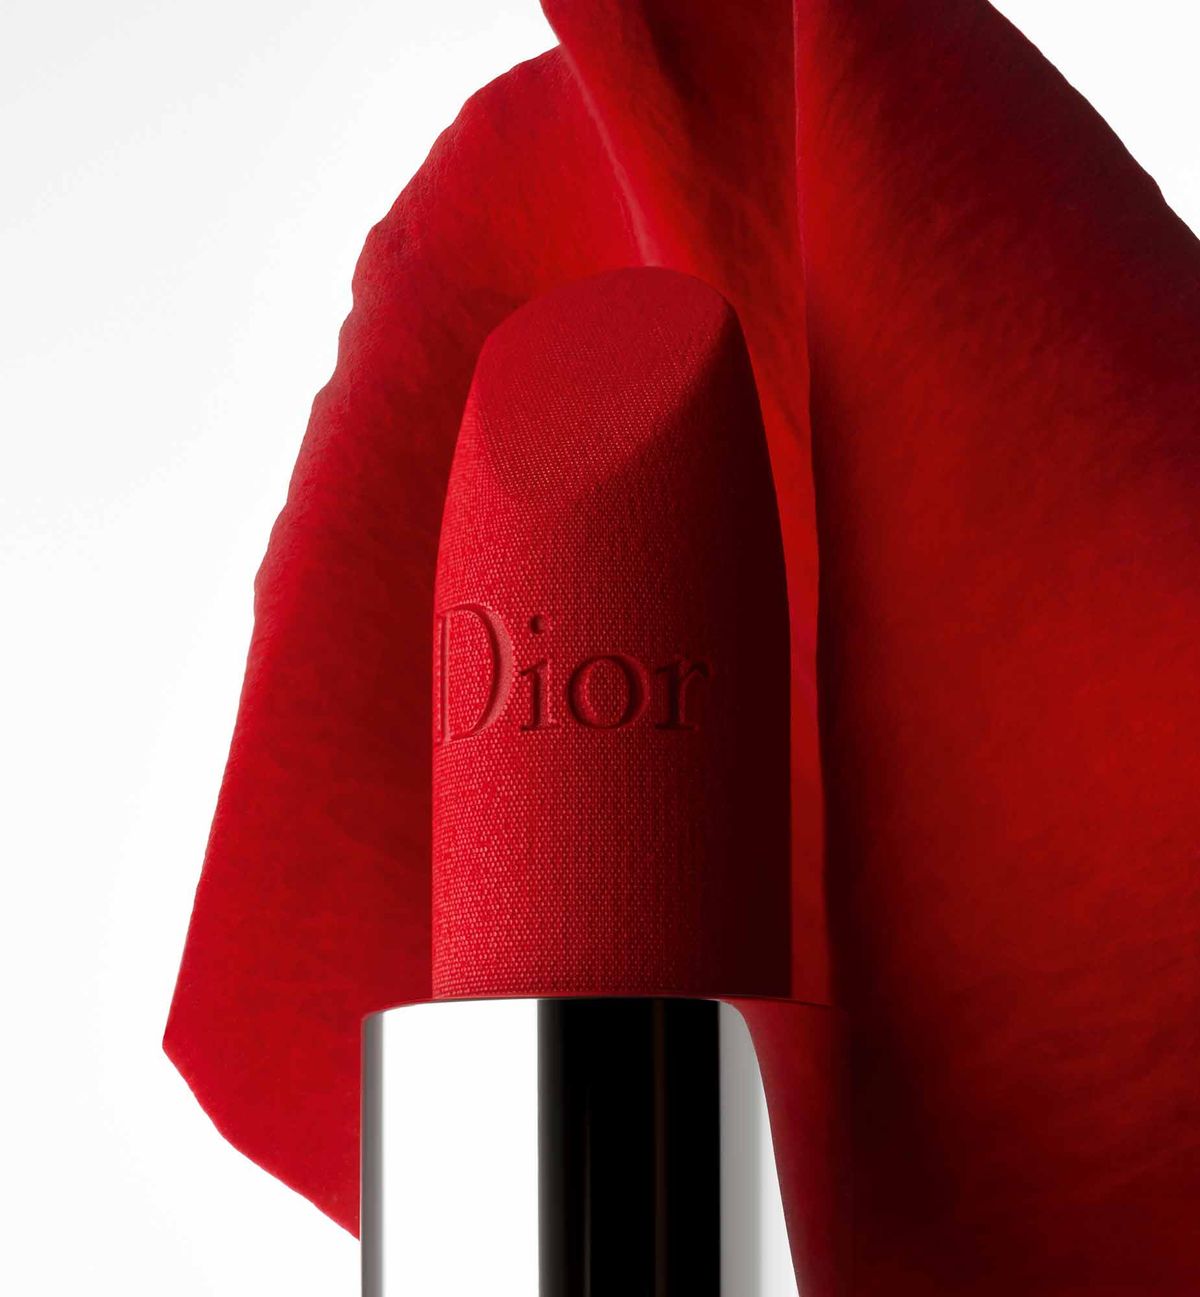 Recarga-Rouge-Dior-999-06--1-